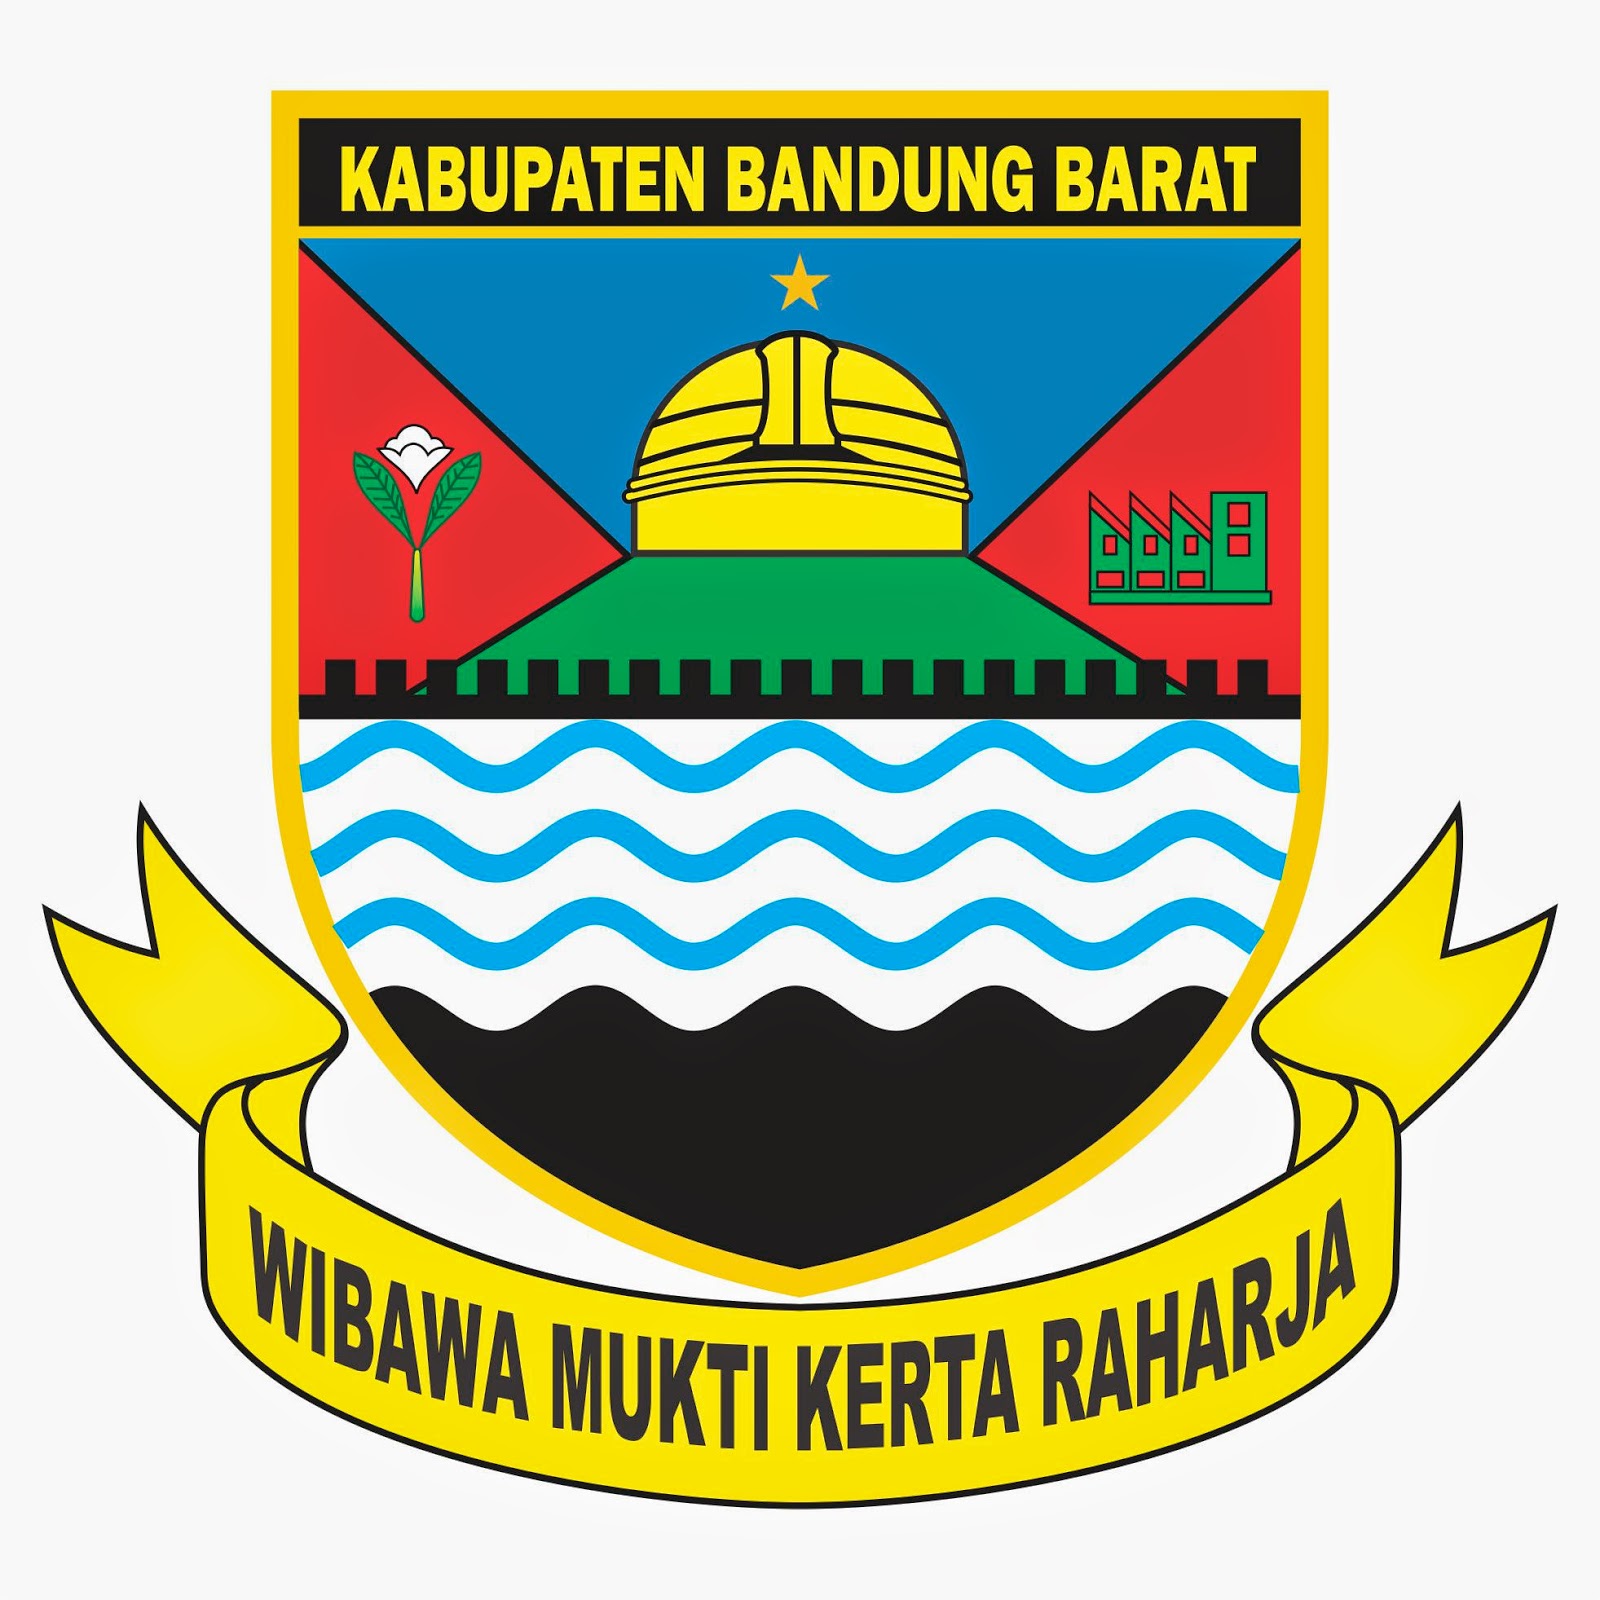 Logo Pemerintah Kab. Bandung Barat | IDVektor - A Place to ...